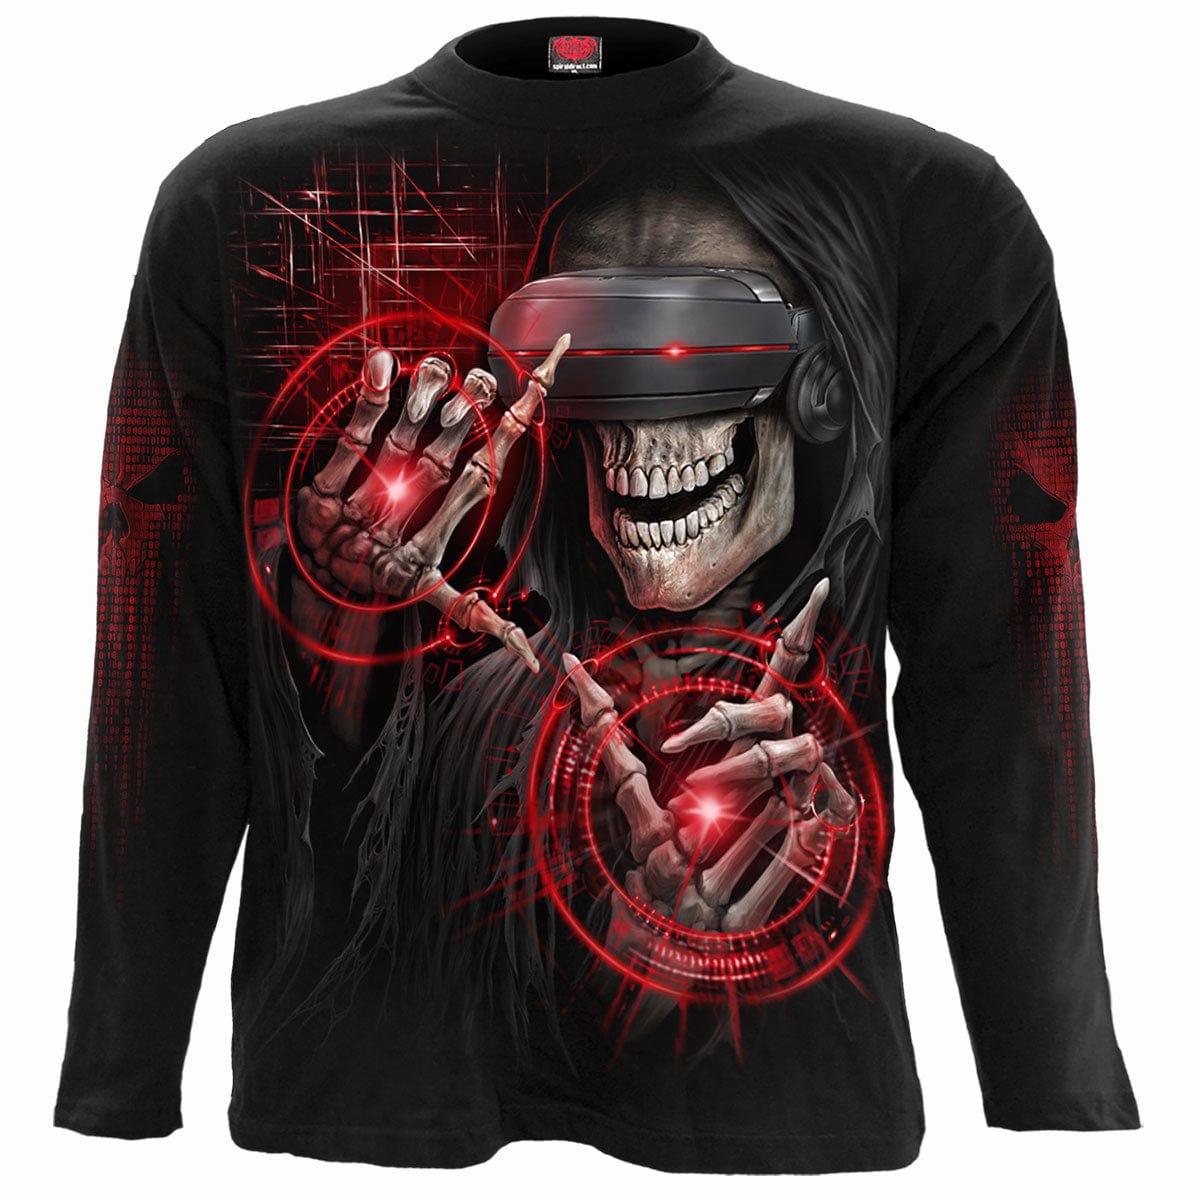 CYBER DEATH - Longsleeve T-Shirt Black